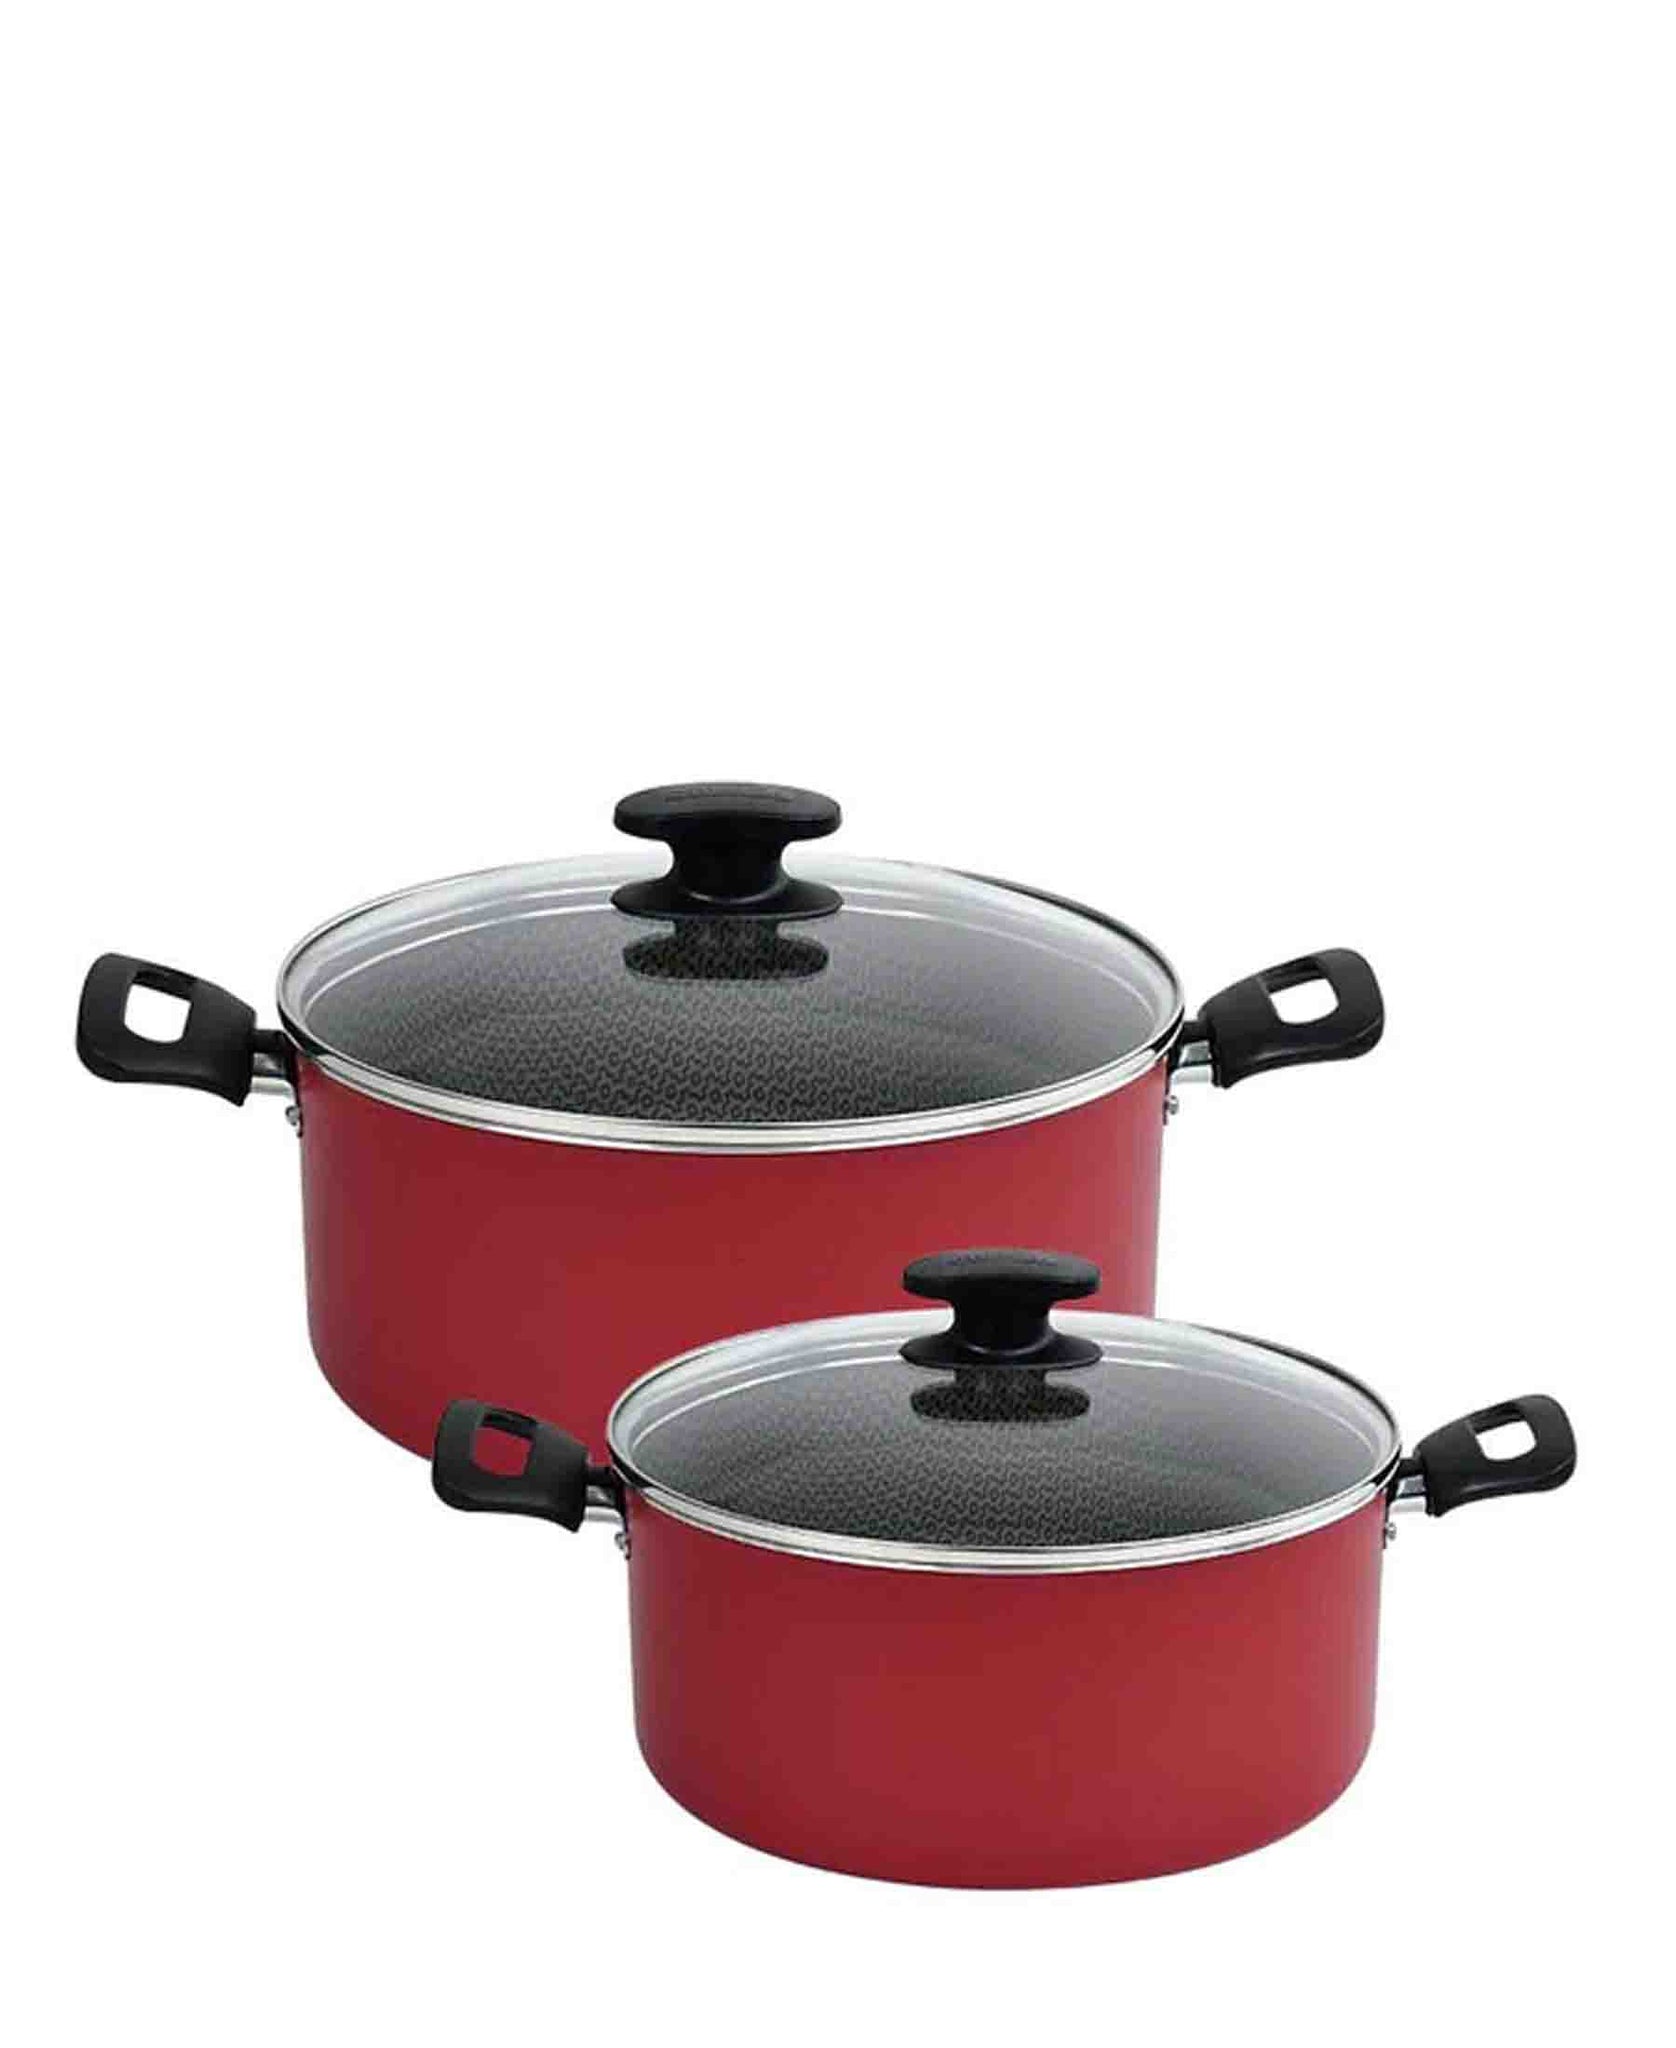 Tramontina 38 Piece Non-Stick Bordo Cookware Set - Red & Black